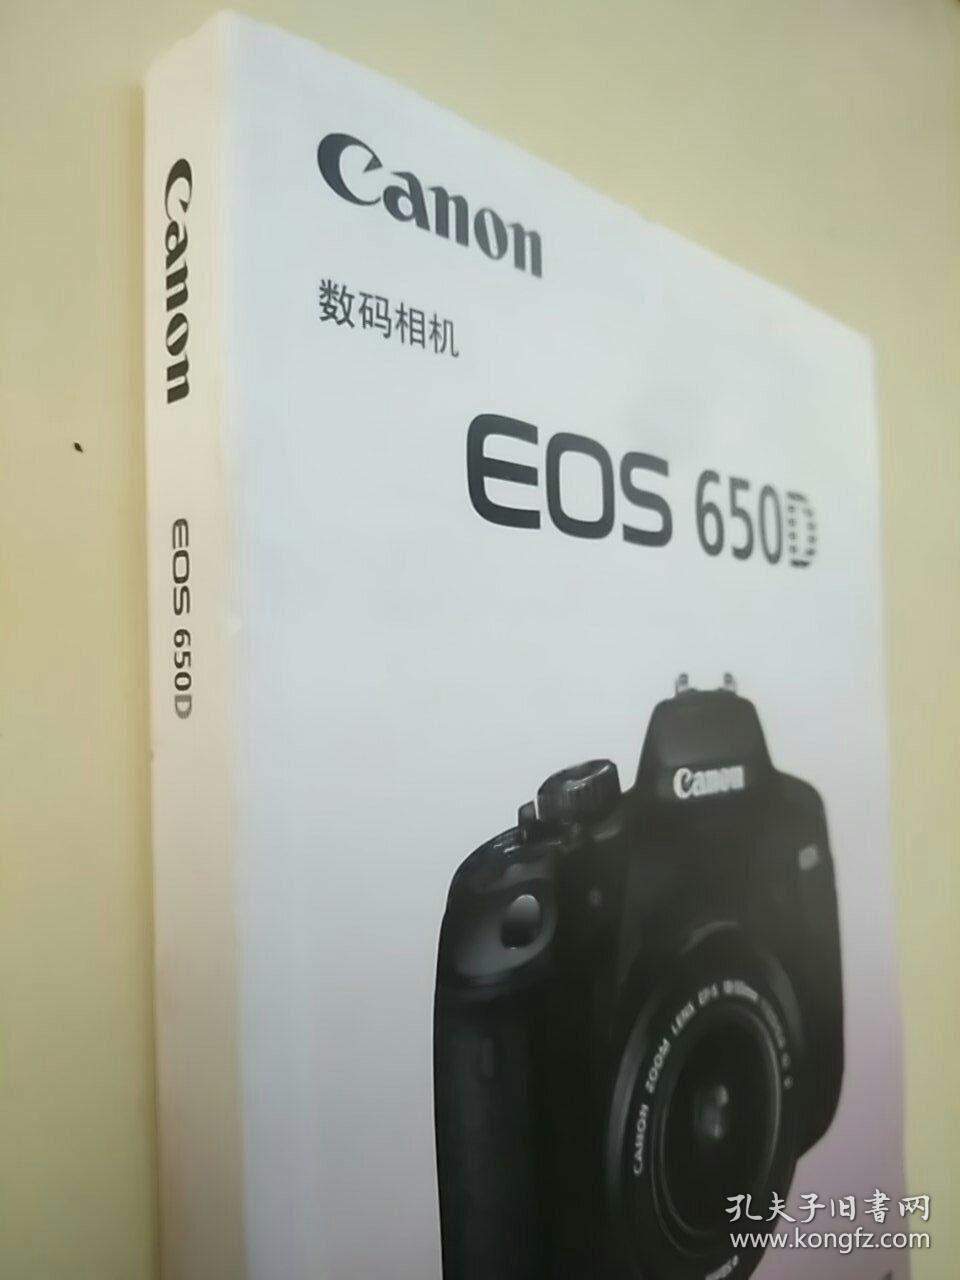 Canon EOS 650D 使用说明书